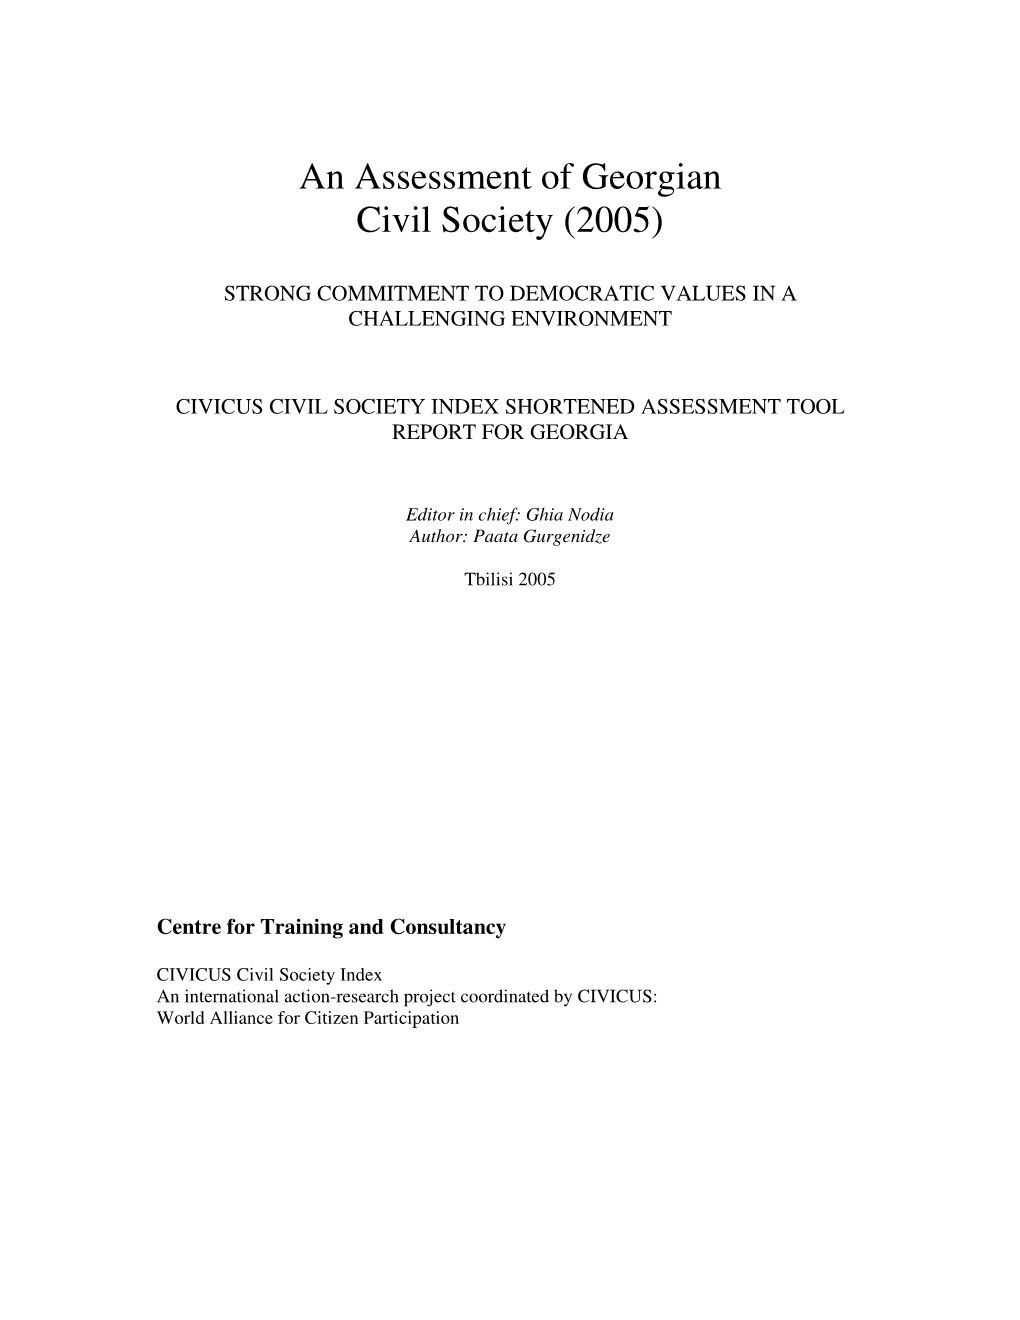 An Assessment of Georgian Civil Society (2005)